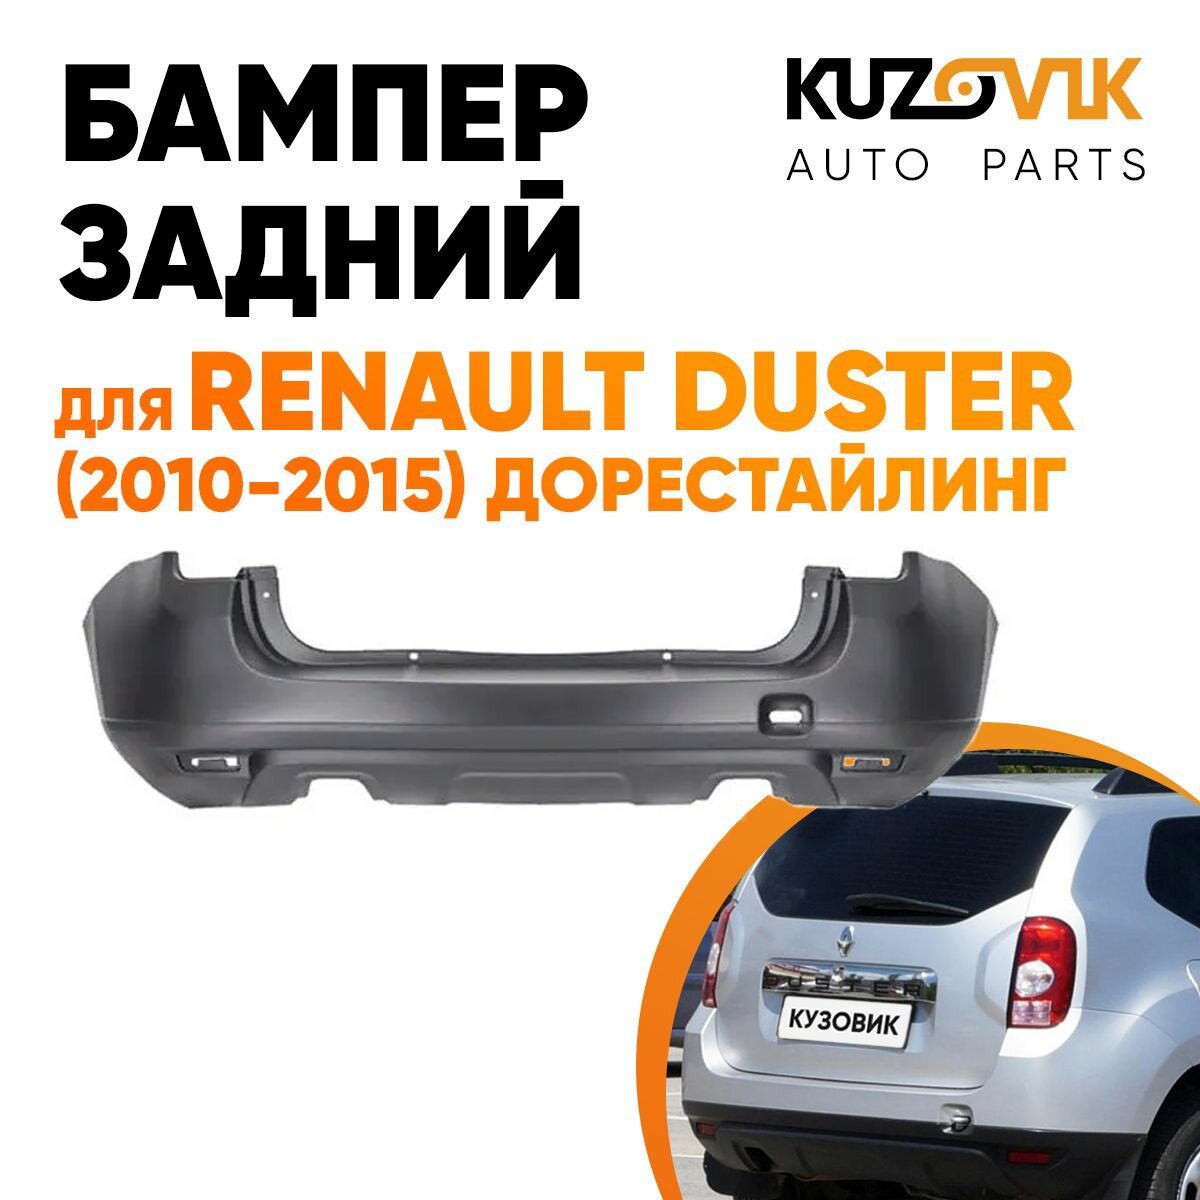 Бампер задний для Рено Дастер Renault Duster (2010-2015) дорестайлинг